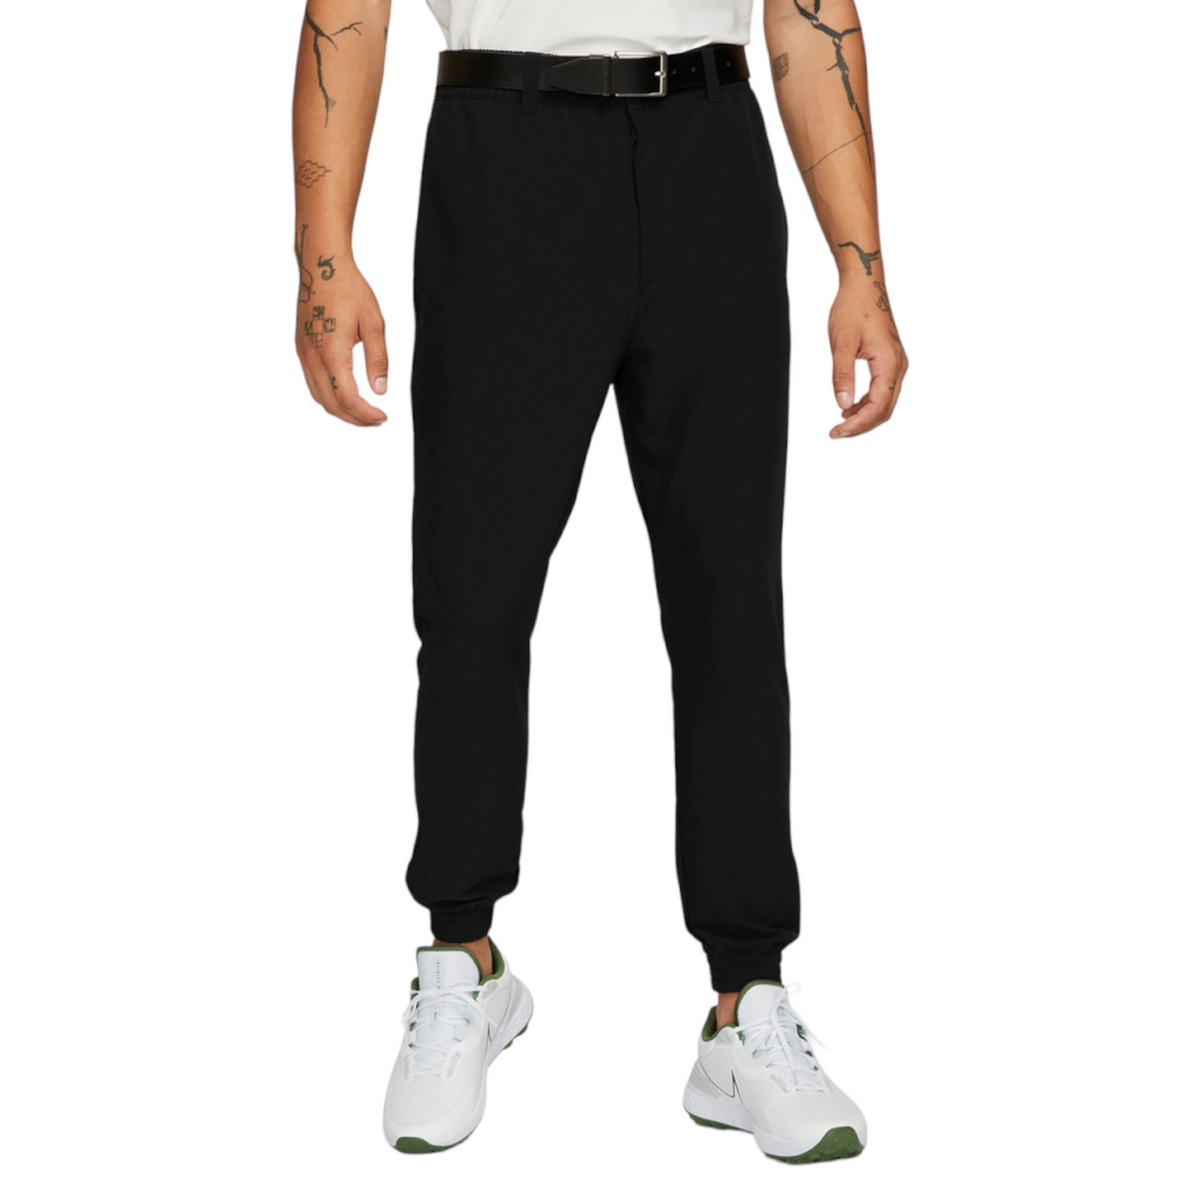 Shop Joggers & Sweatpants Nike Online